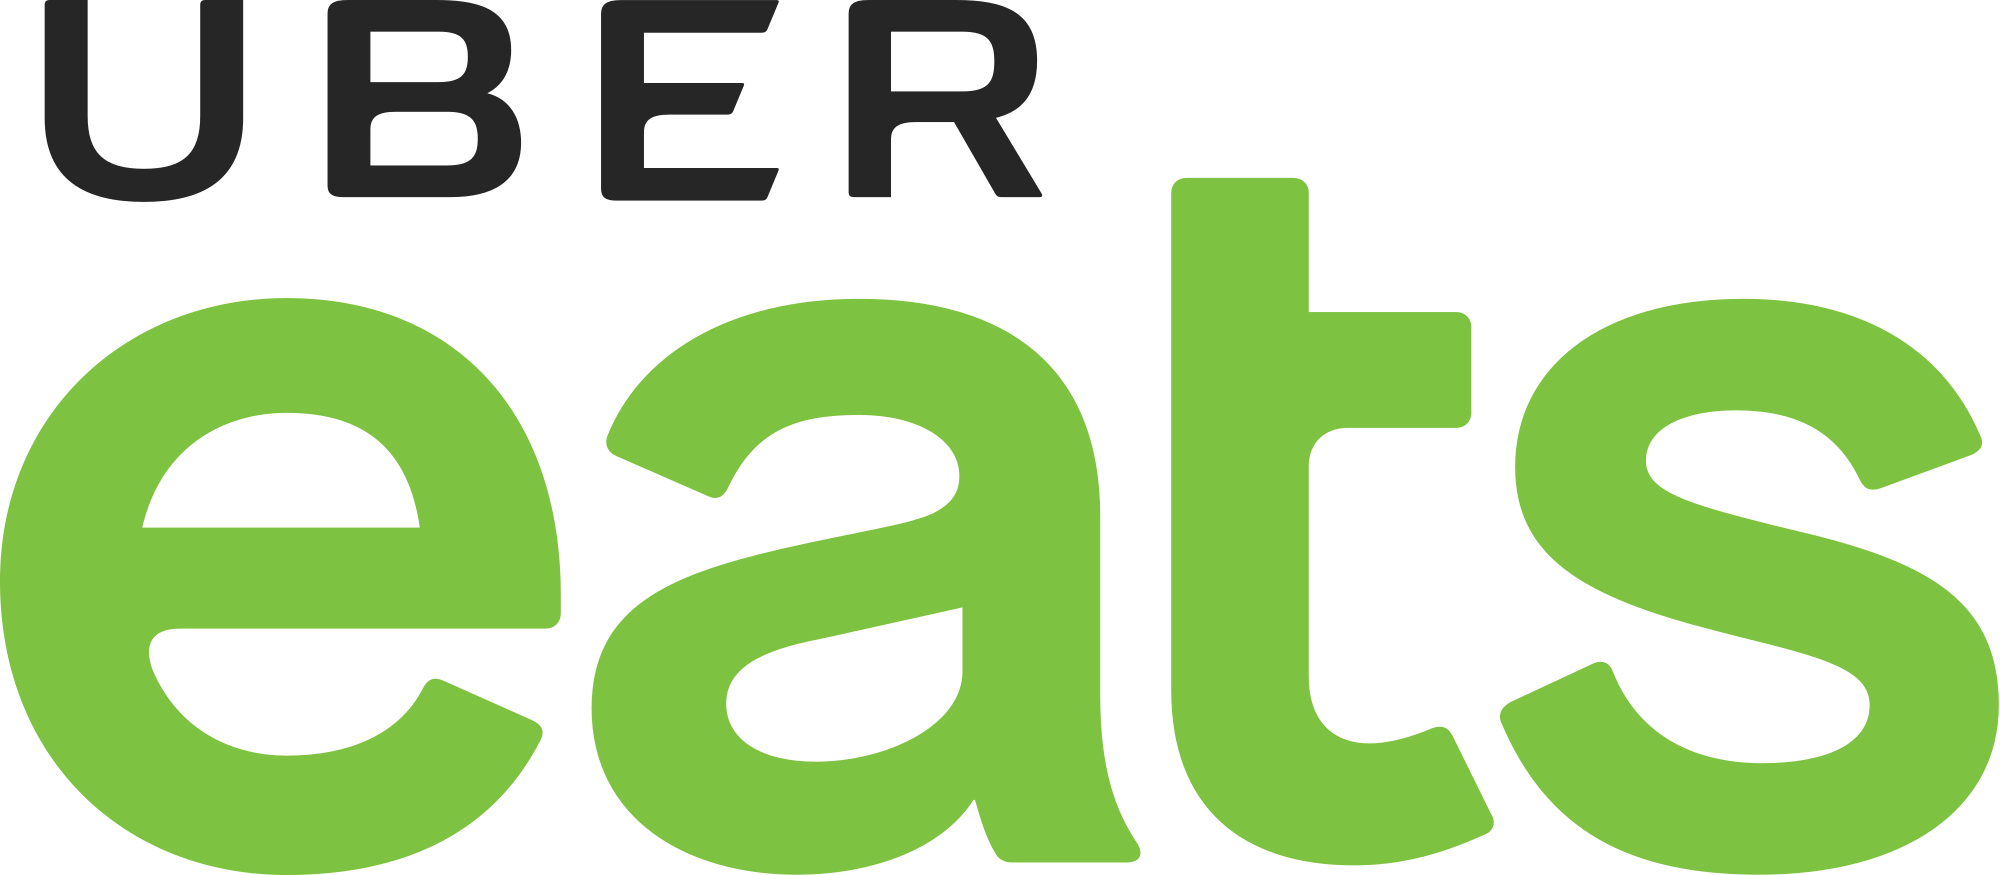 Uber Green Logo - File:UberEATS logo december 2017.svg - Wikimedia Commons